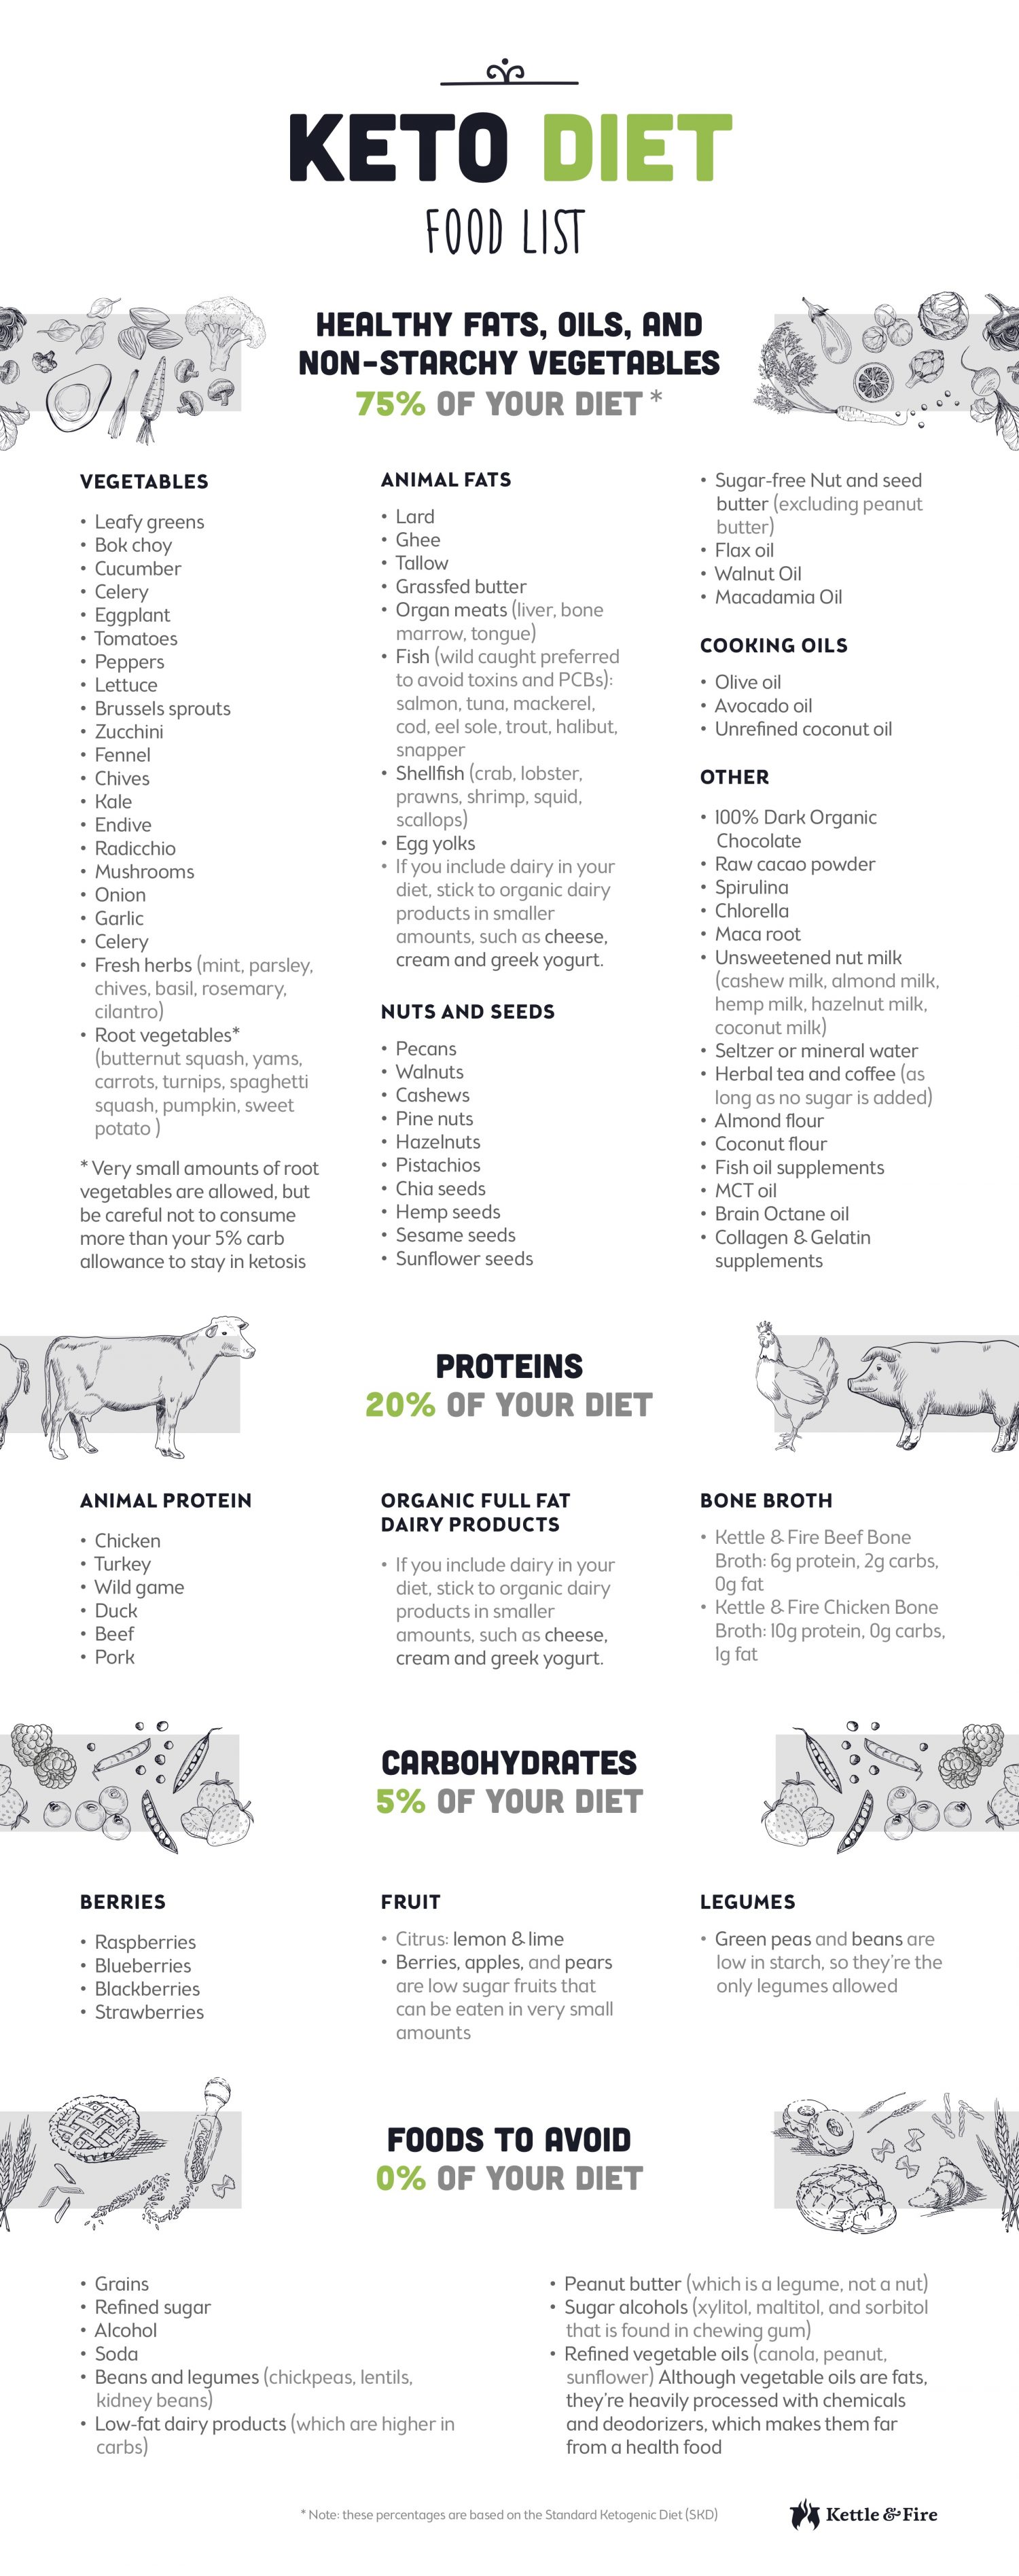 Keto-Diet-Food-List-Infographic-e1496168